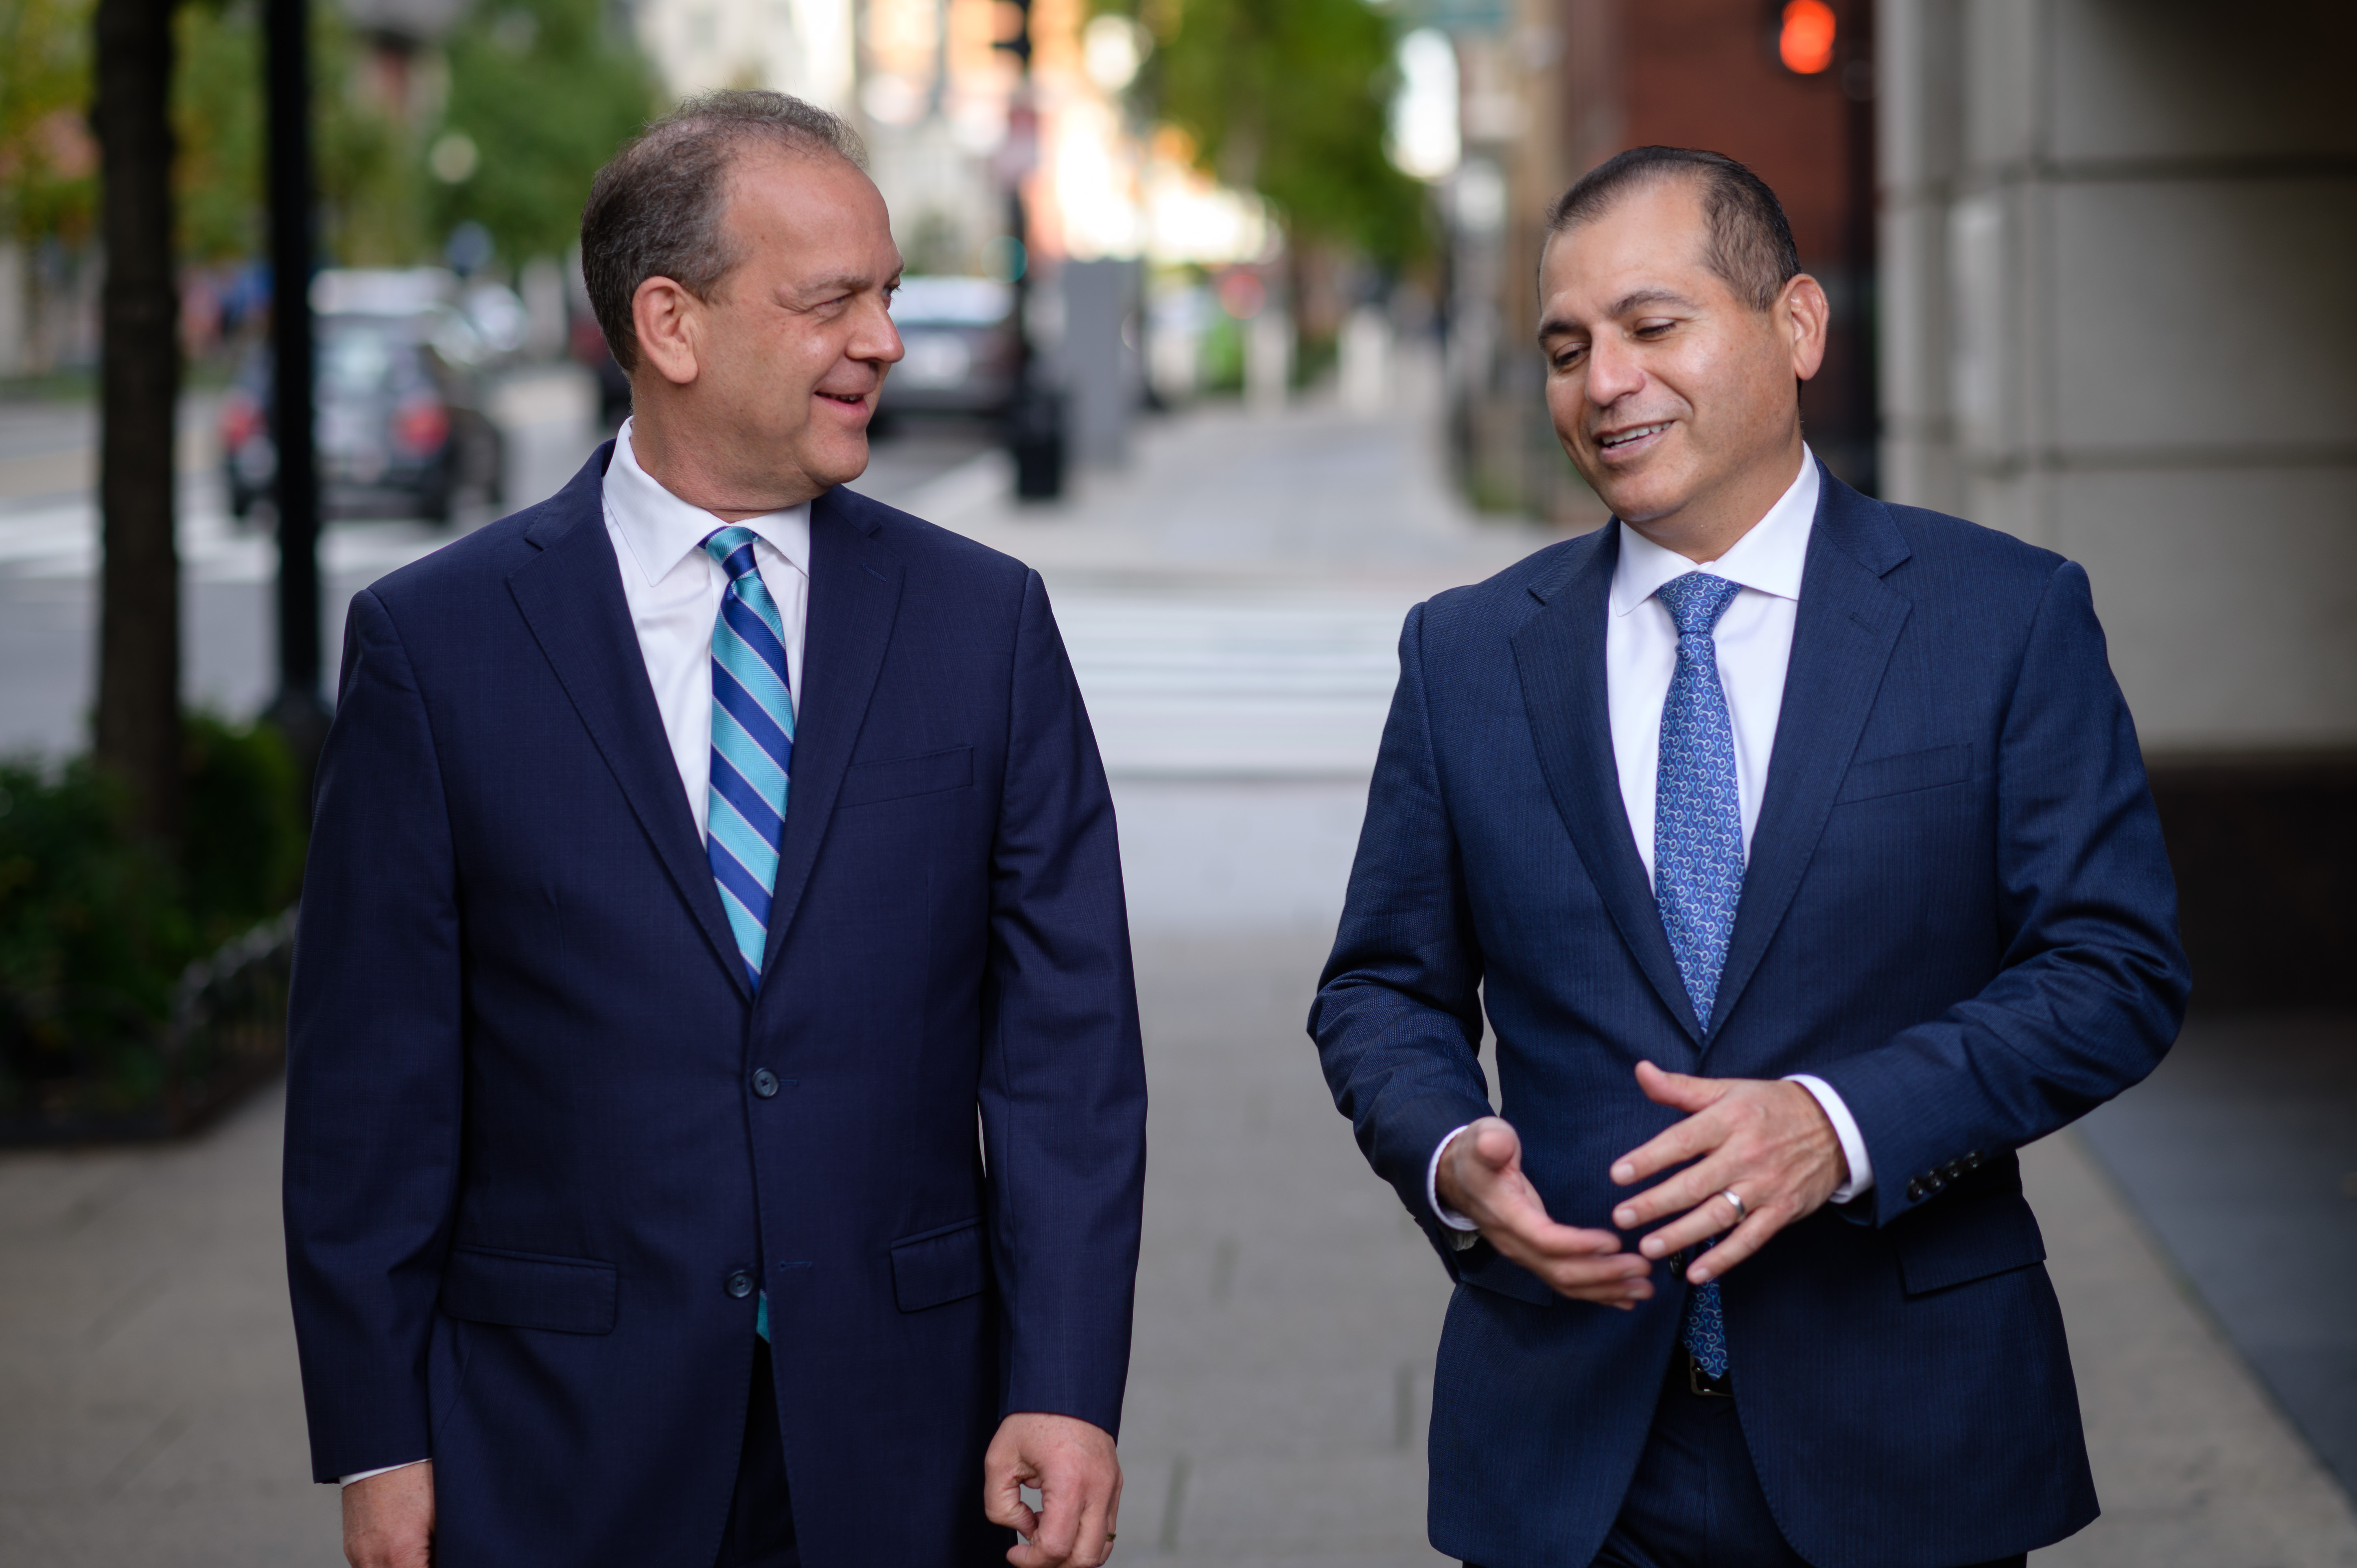 Daniel A. Nissenbaum and Reymundo Ocañas talking together while walking down the street.